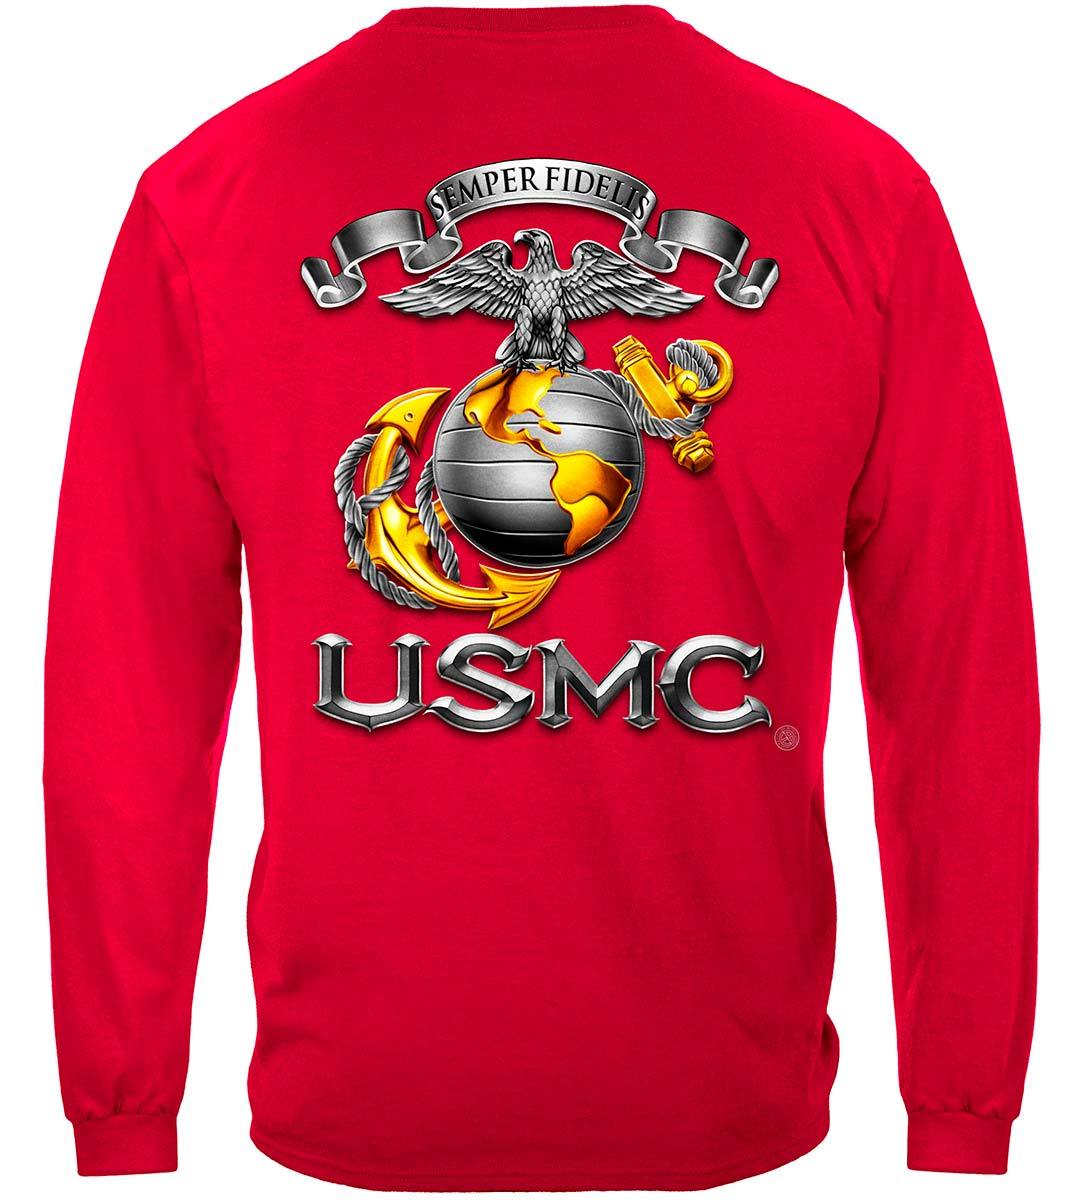 USMC-Semper Fidelis Premium Long Sleeves